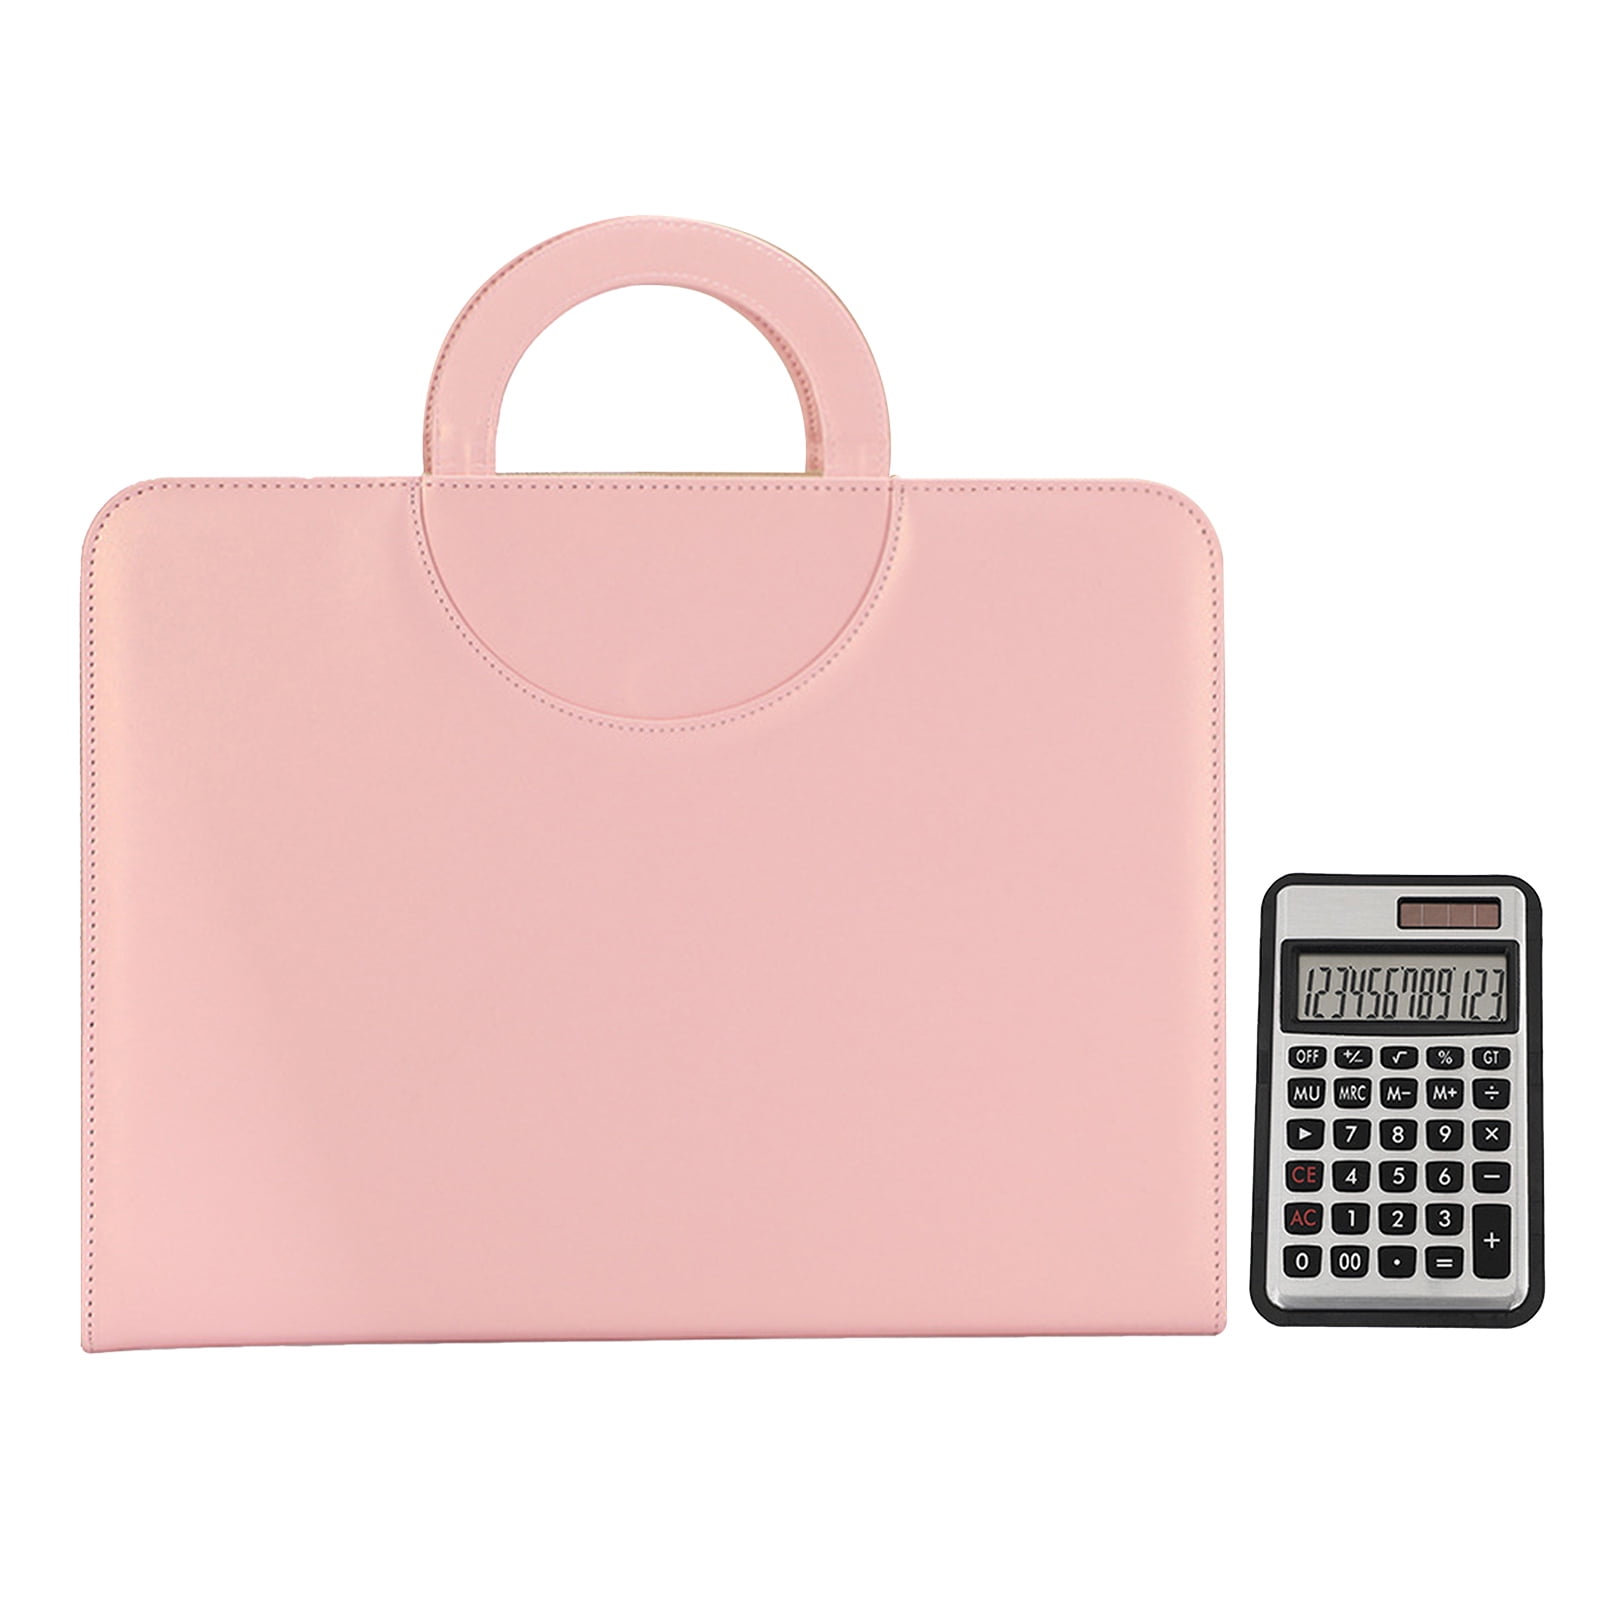 1* A4 PU Folder Large Capacity 12-bit Calculator Briefcase Business Binder Black